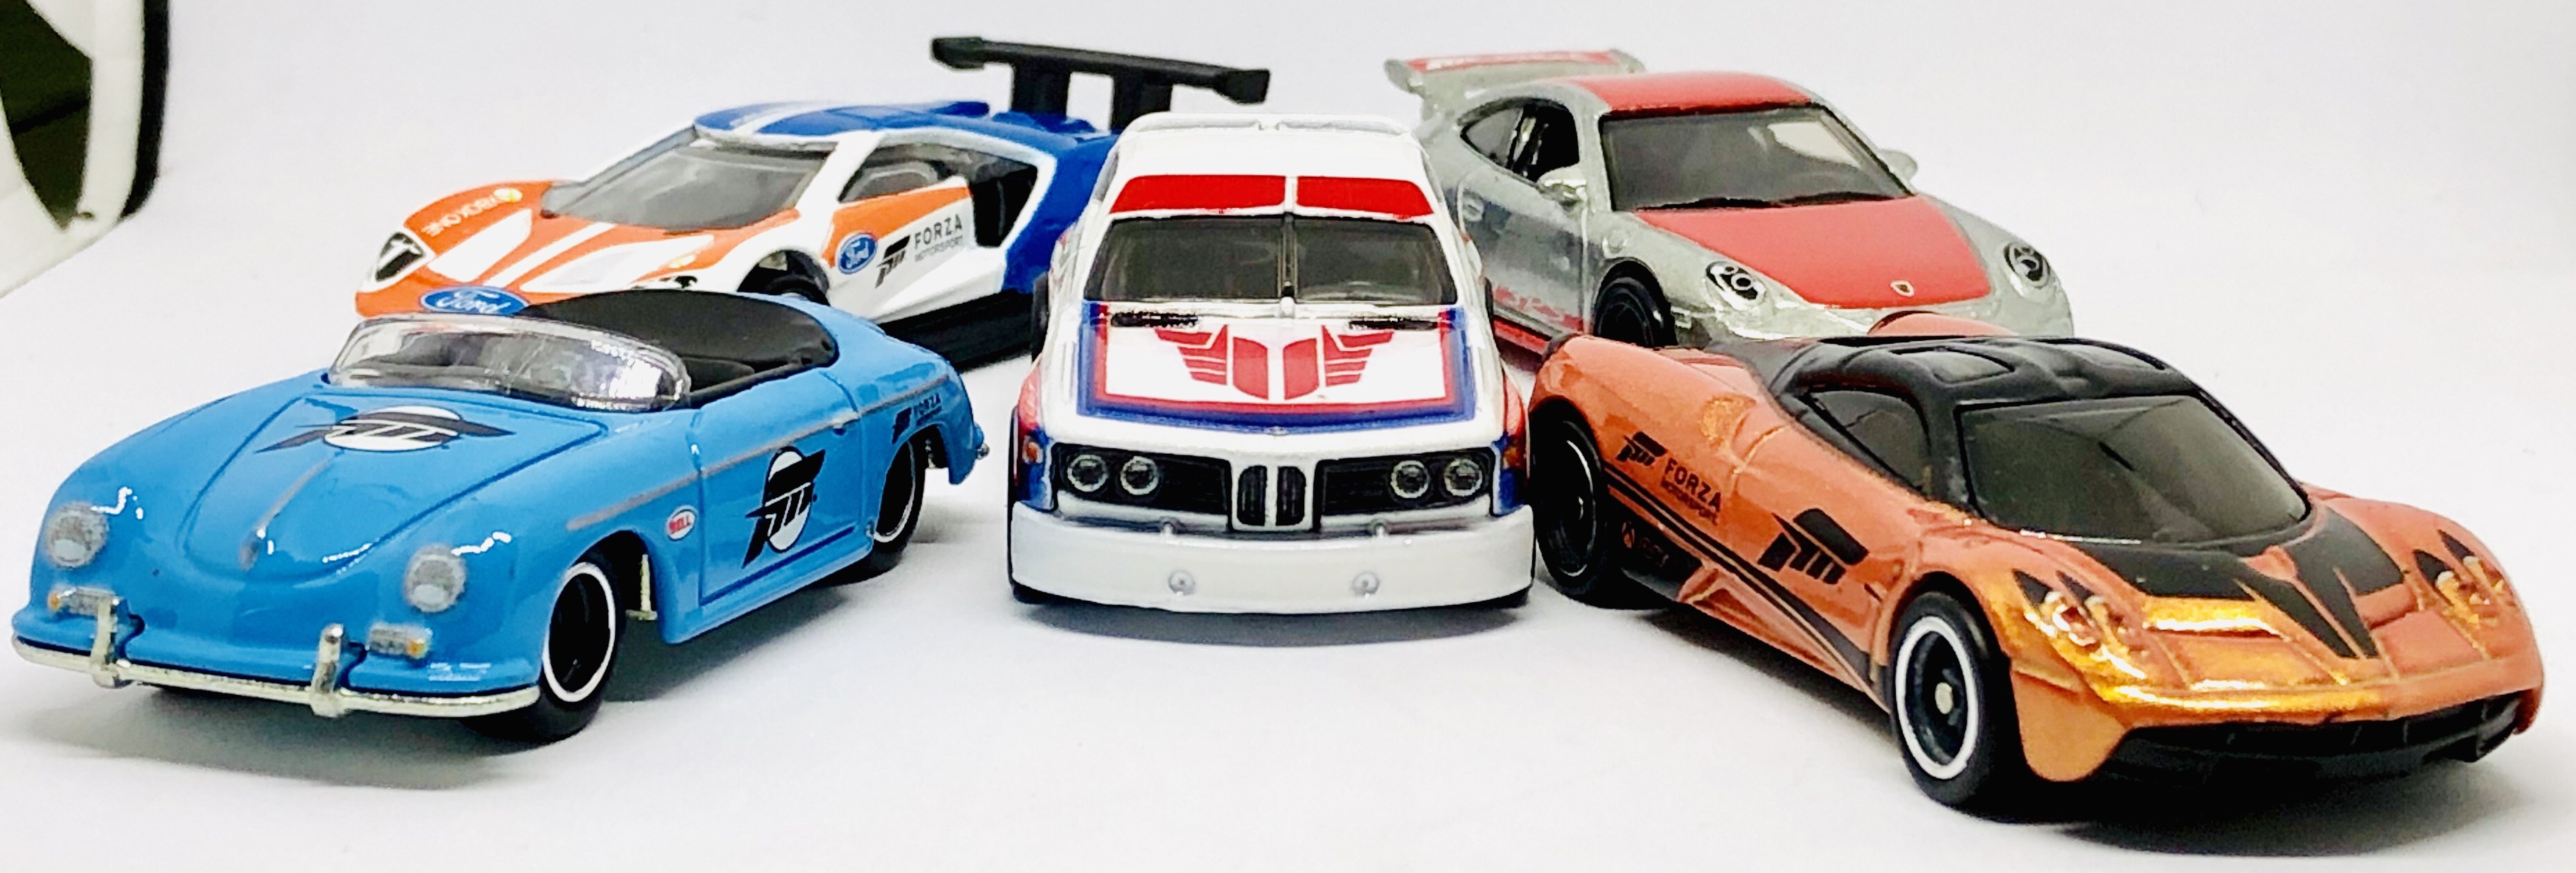 Hot Wheels Forza Series - Bmw E9 , HD Wallpaper & Backgrounds